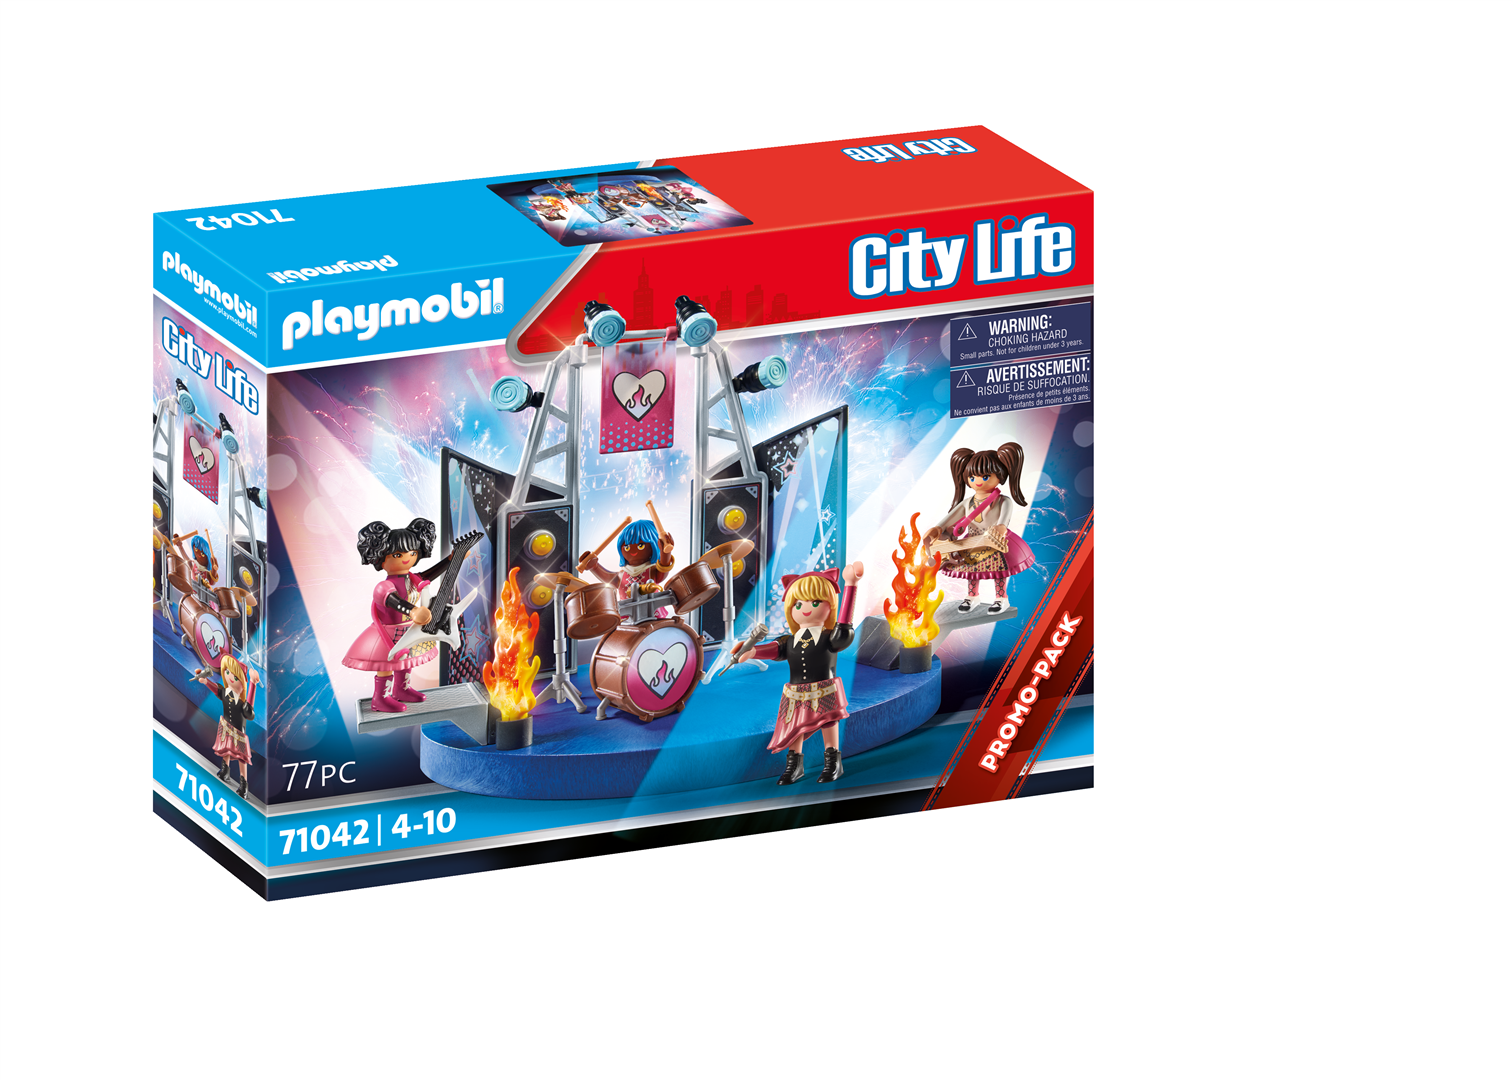 Playmobil city life promo pack rock band per bambini dai 4 anni in su - Playmobil